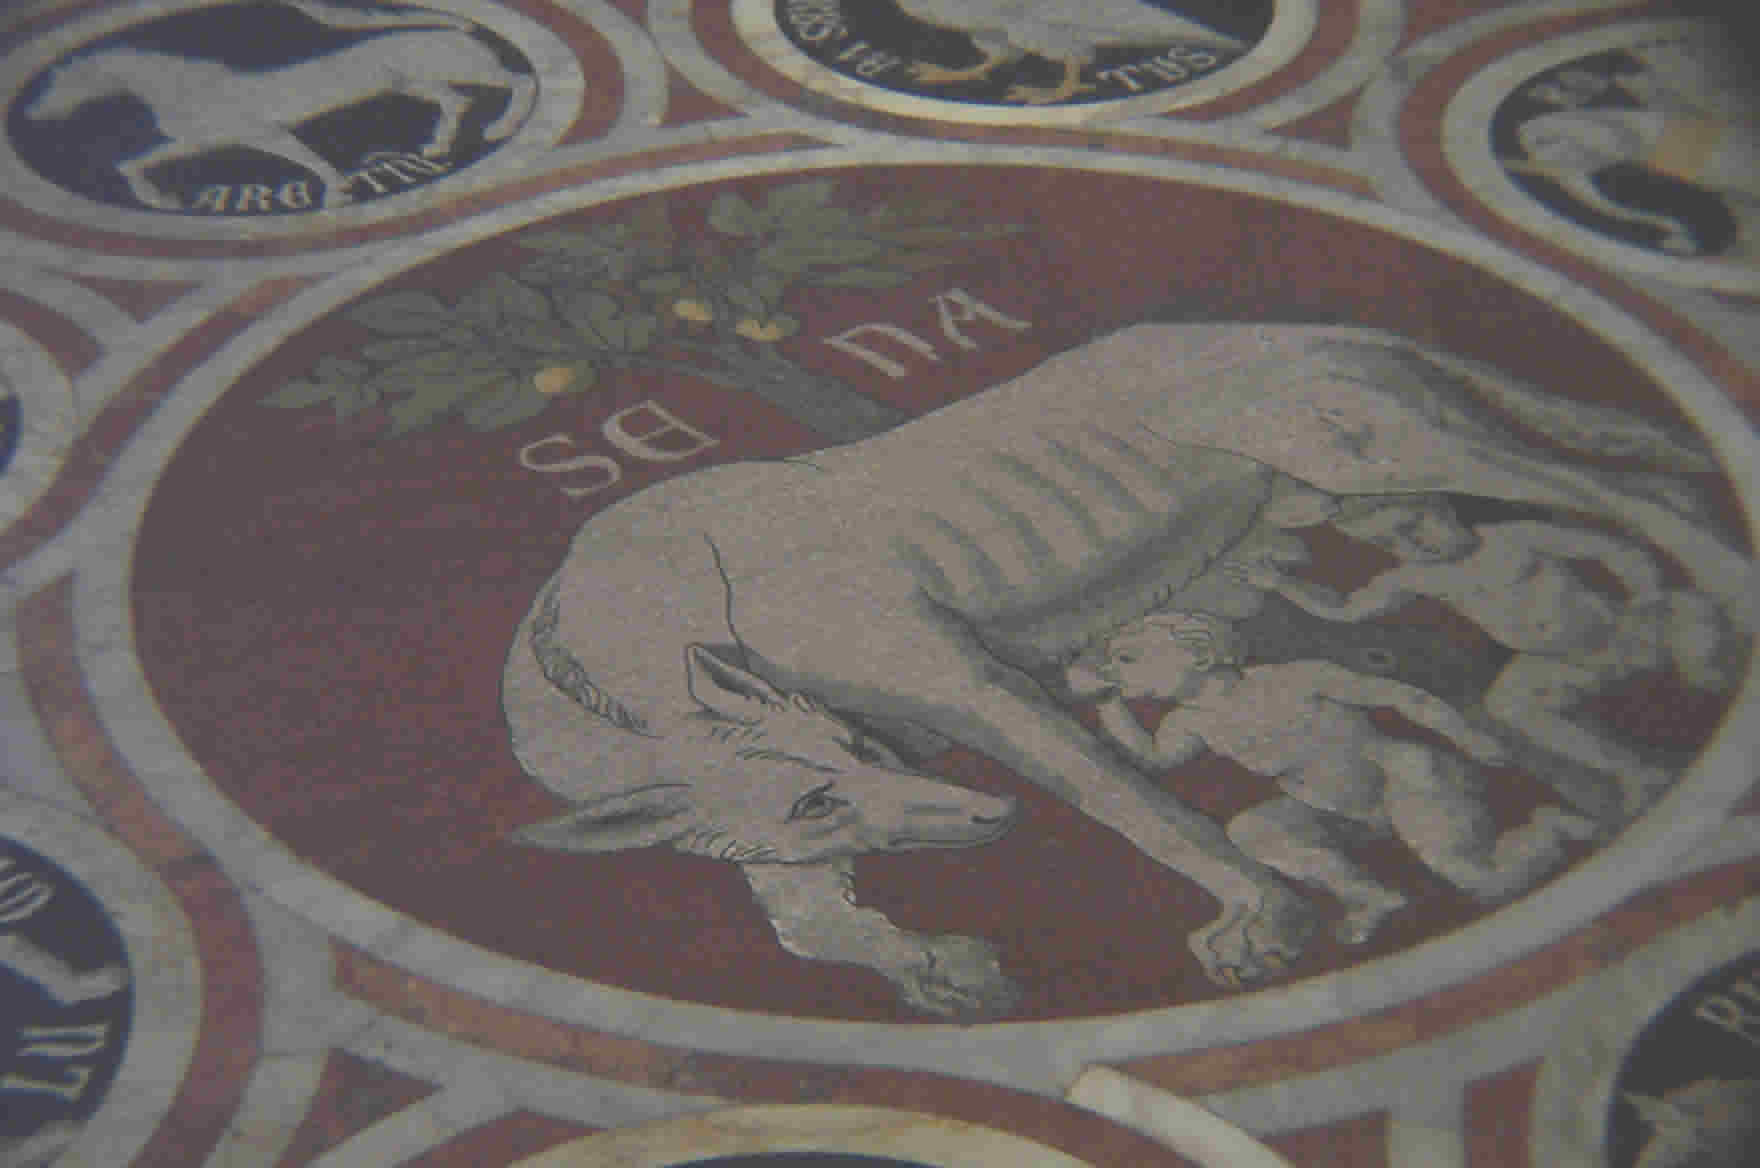 Duomo floor detail